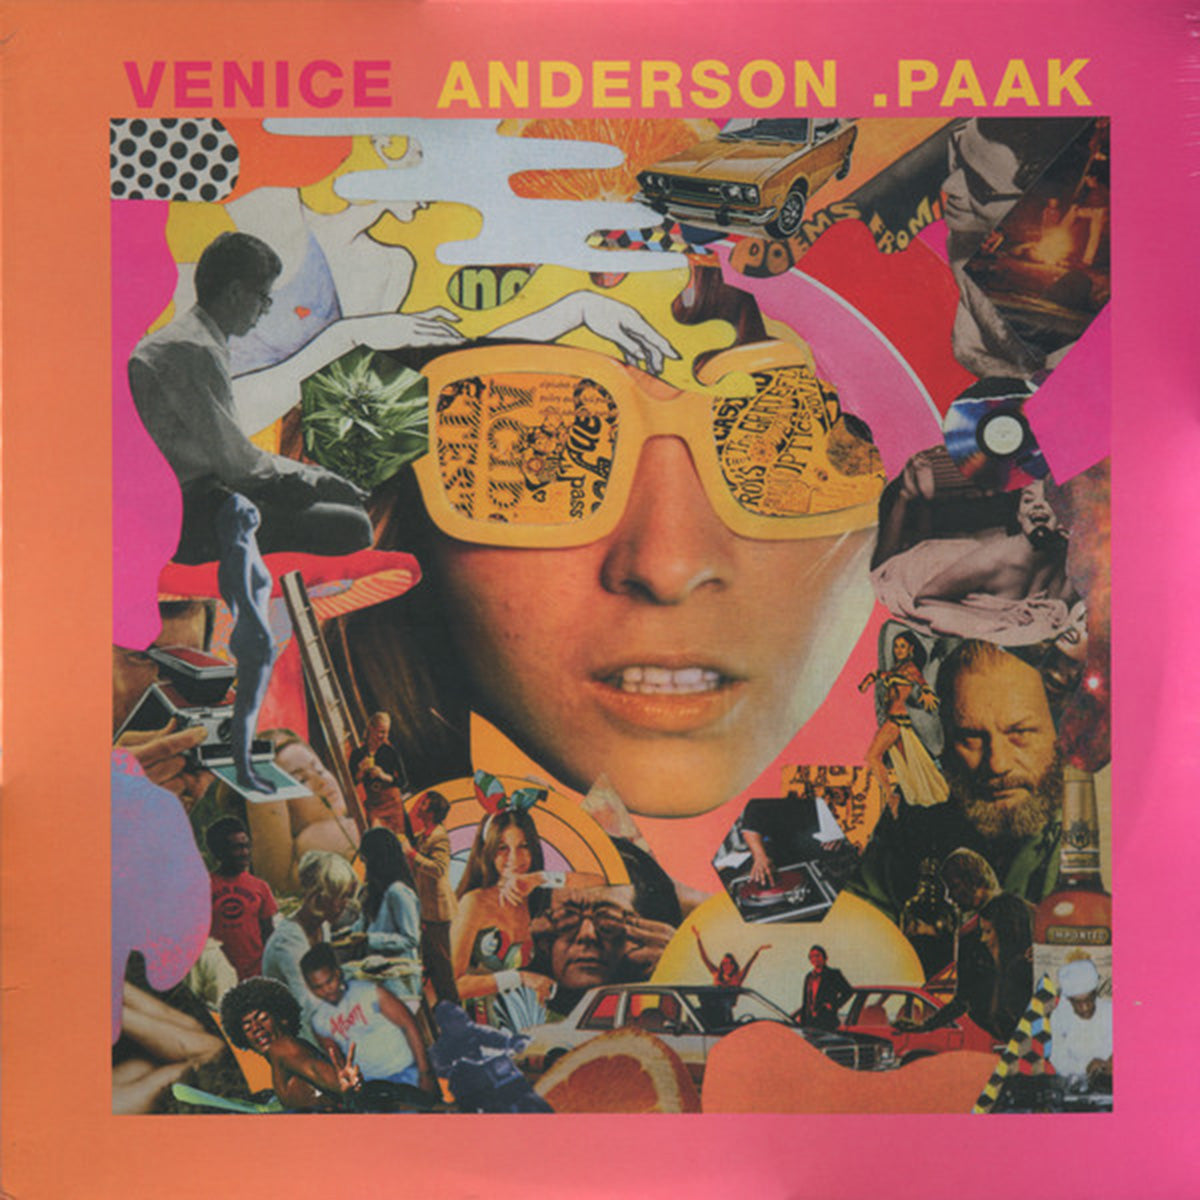 Anderson .Paak – Venice - US Pressing